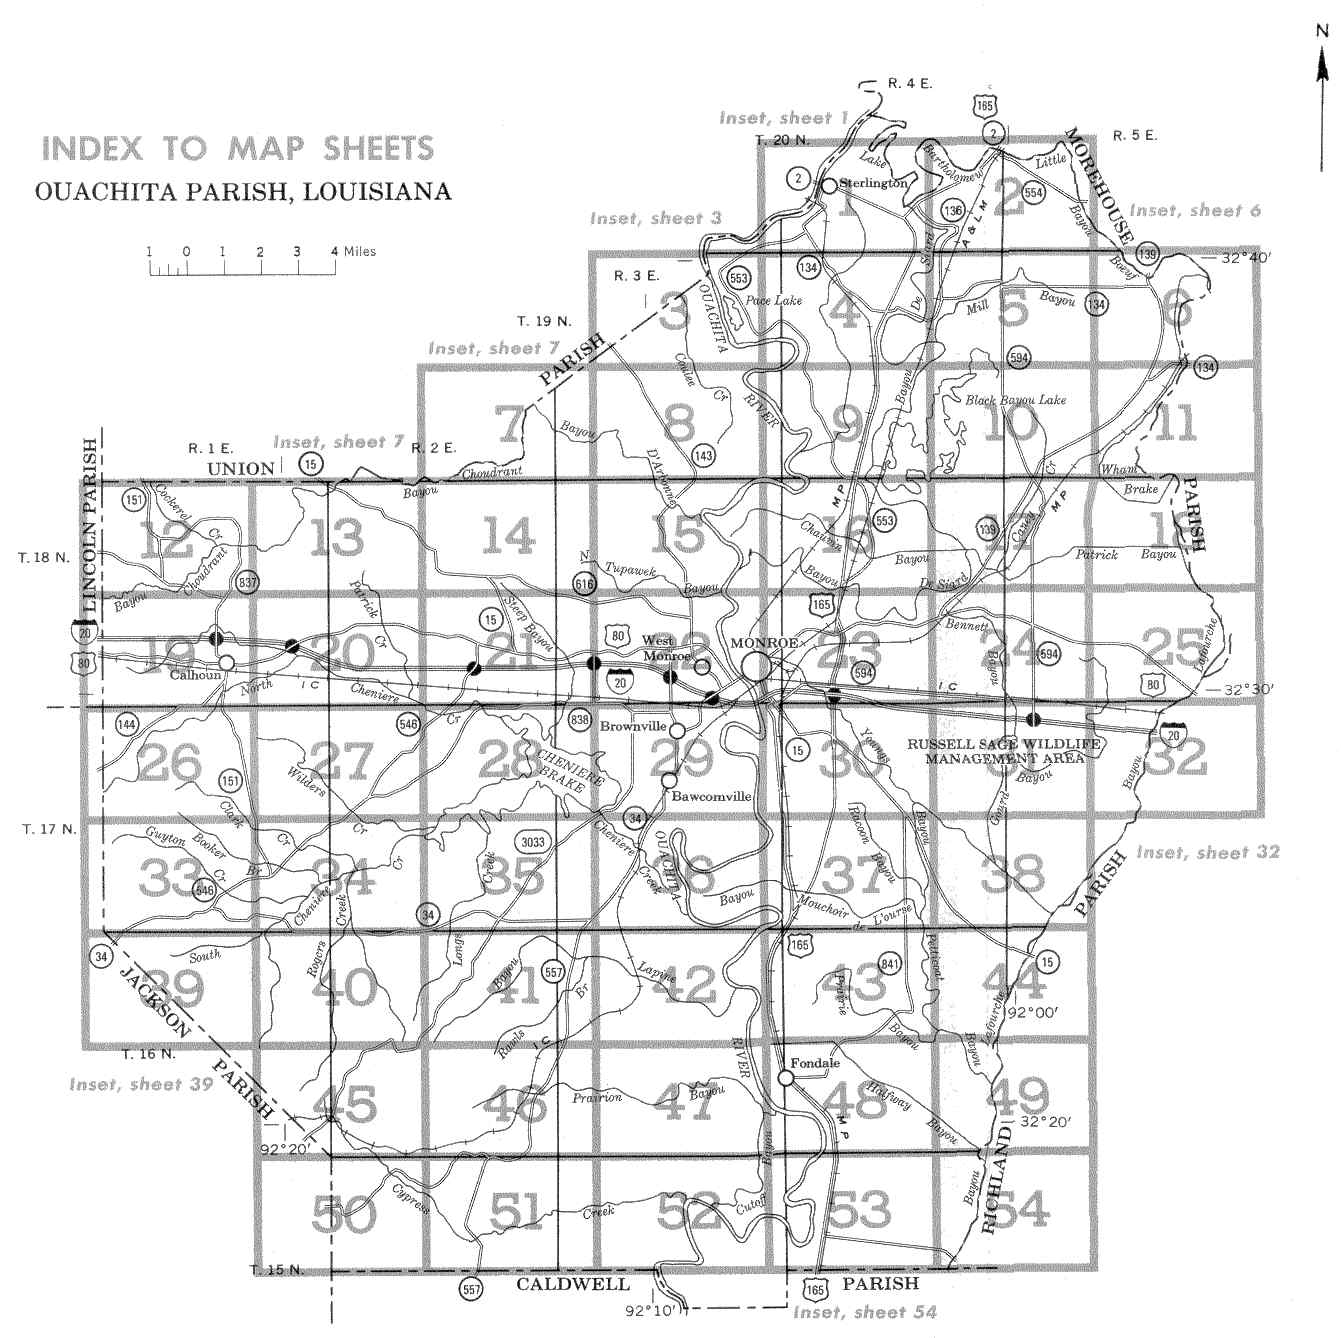 Index Map of Soil Survey Map Sheets For Ouachita Parish Loiusiana